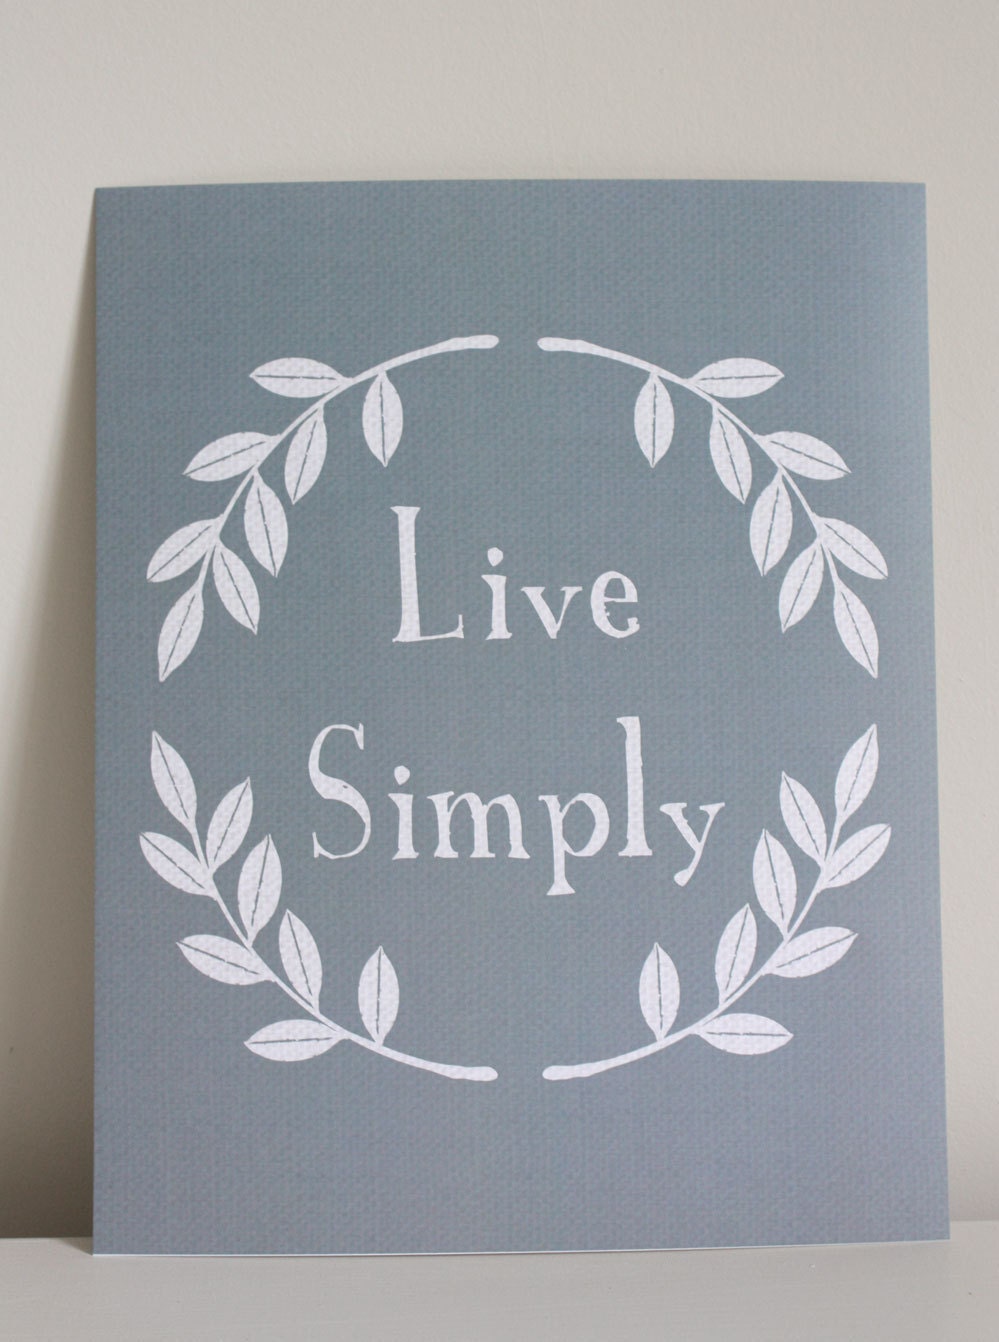 8x10 Live Simply print